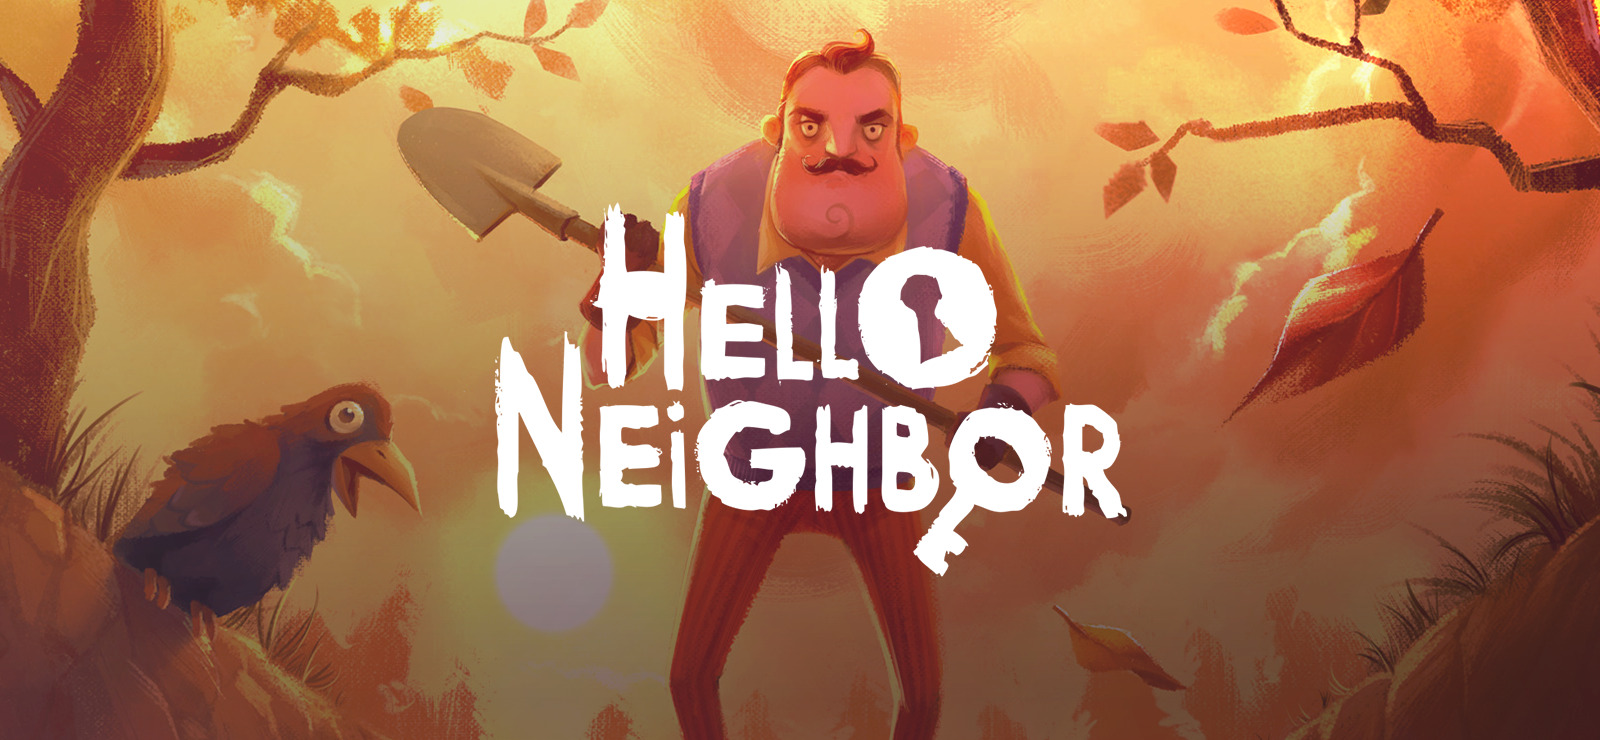 hello neighbor free download mobile